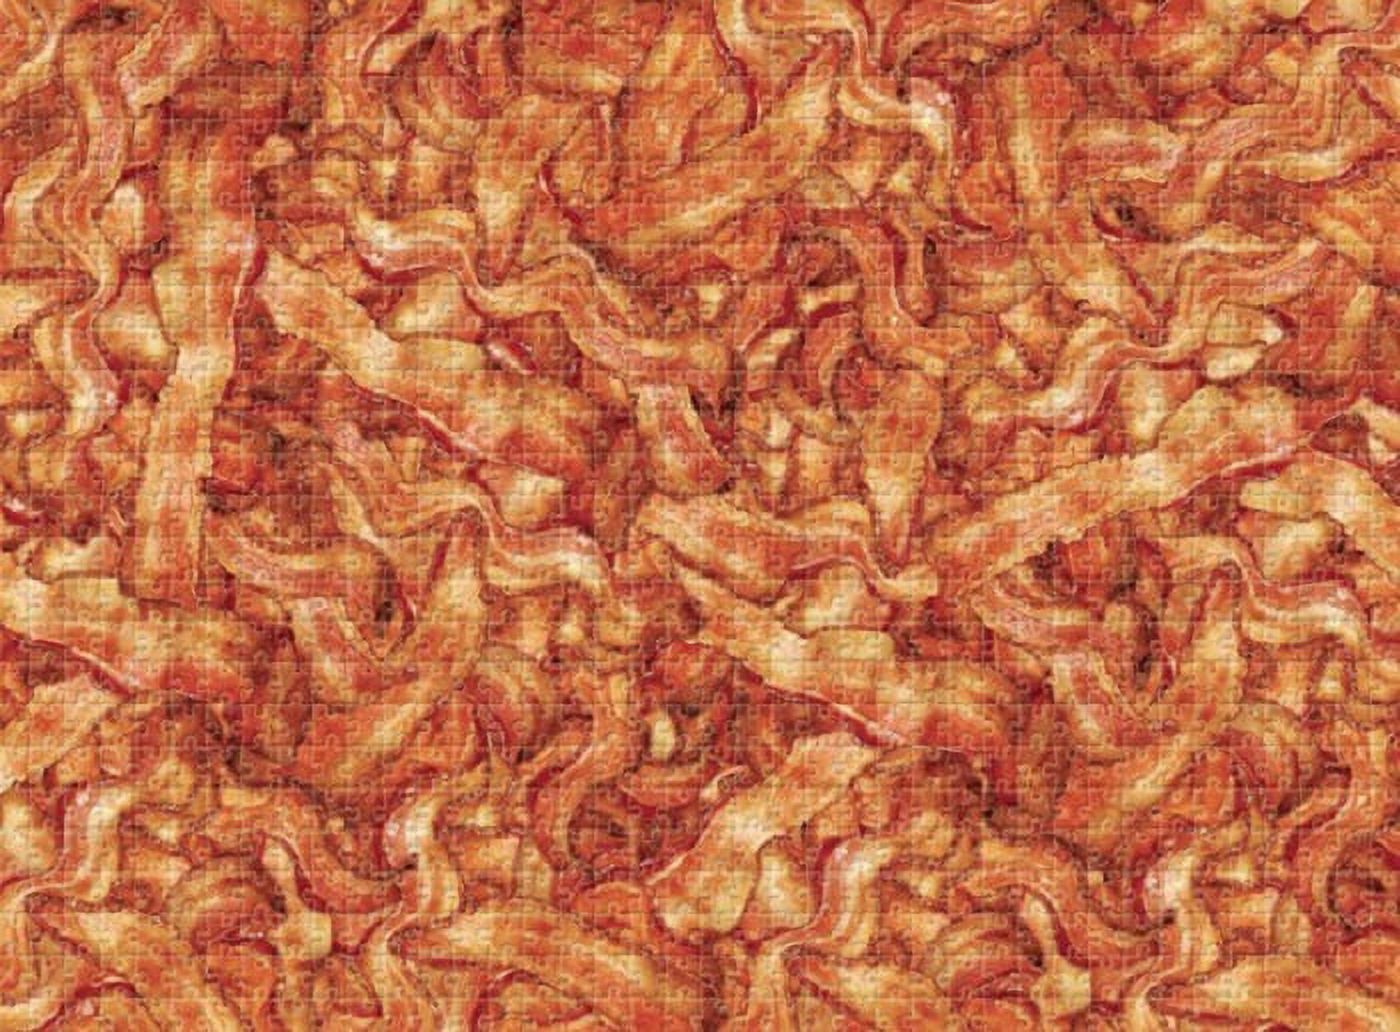 Bacon 1000 Piece Puzzle - image 2 of 2